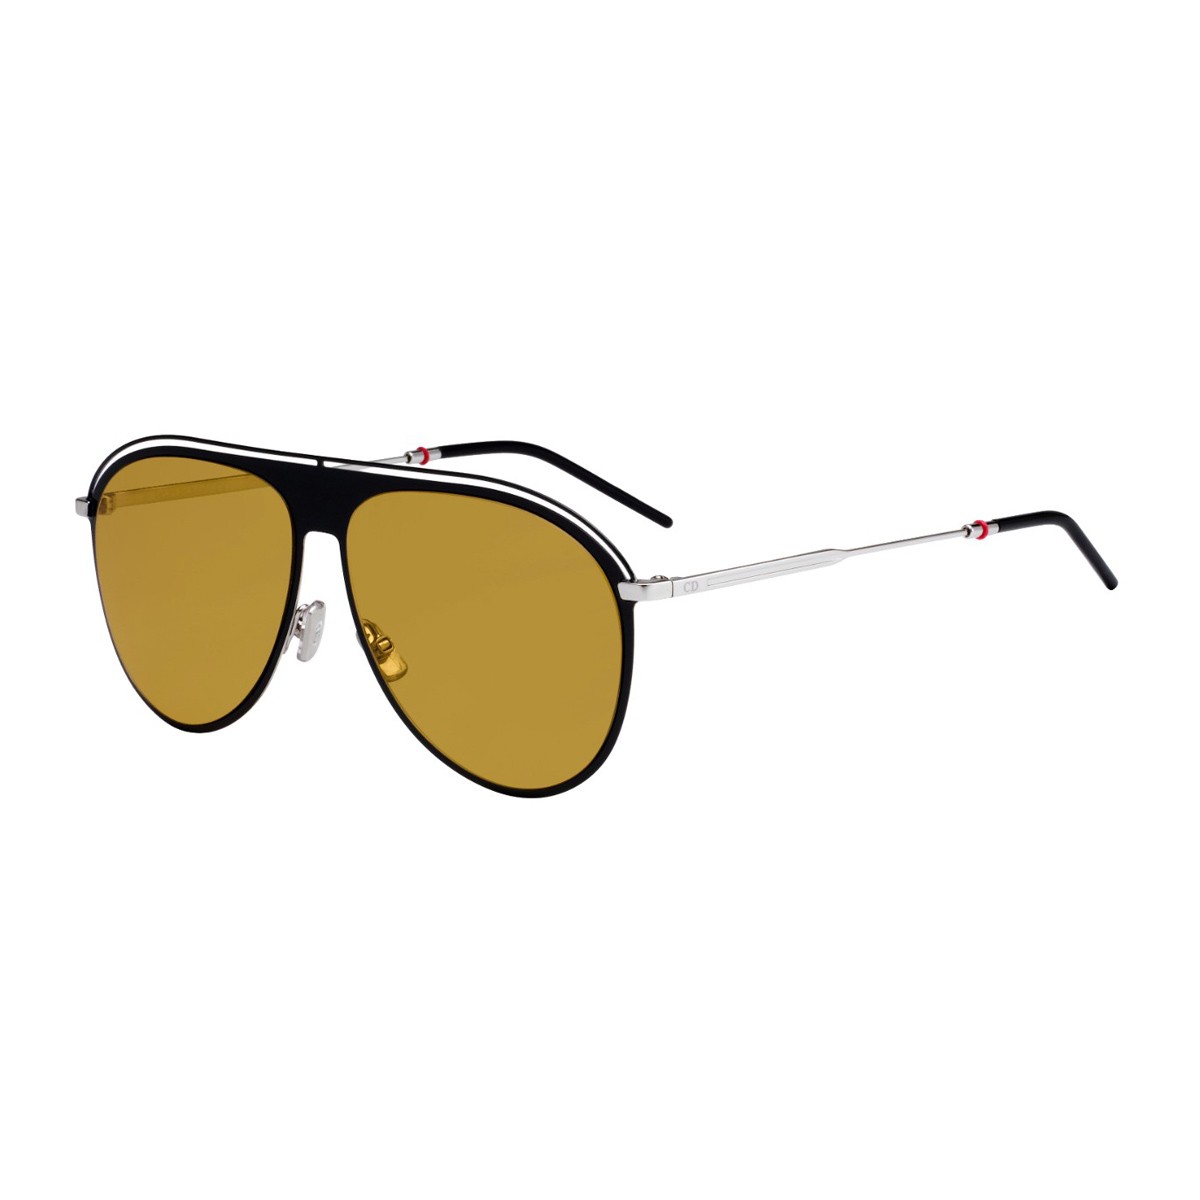 Dior 0217 S | Men's sunglasses